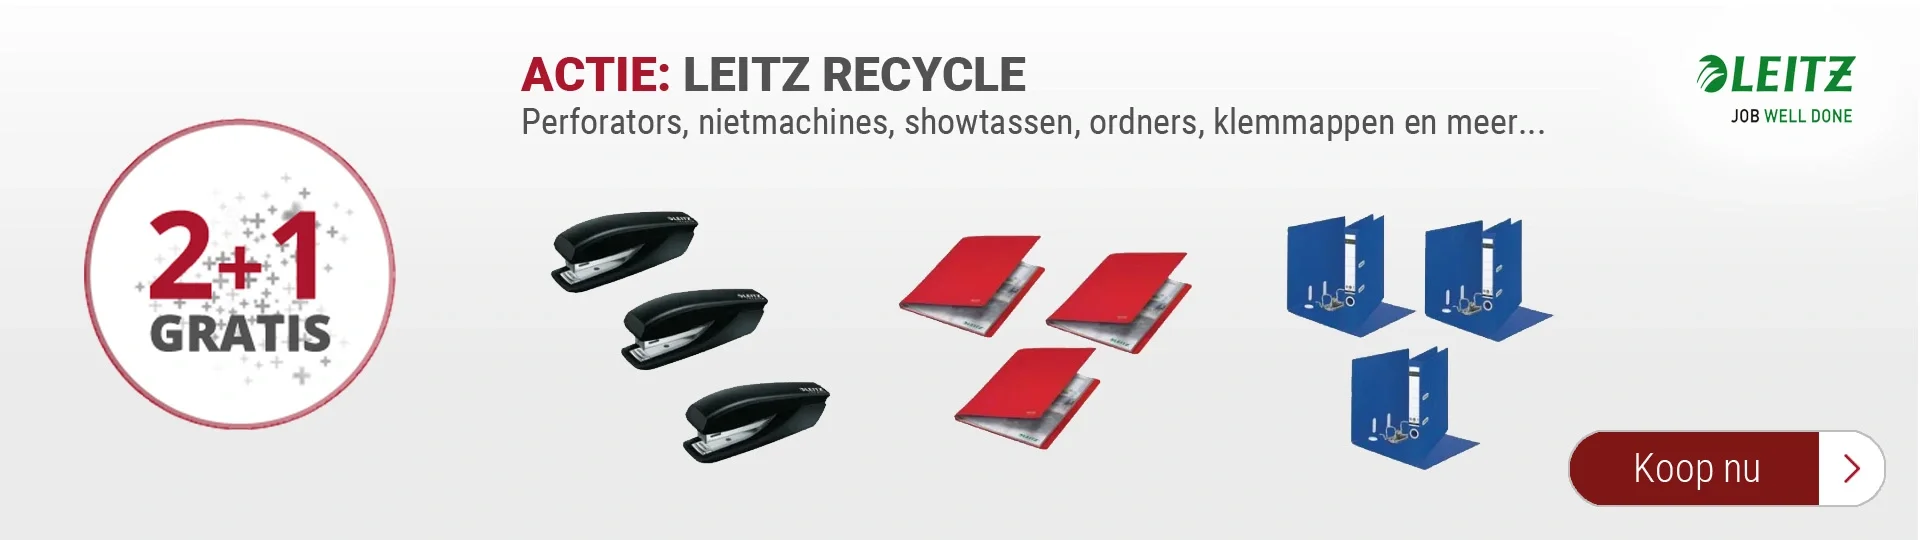 Leitz recycle 2+1 gratis| oxeurope.nl